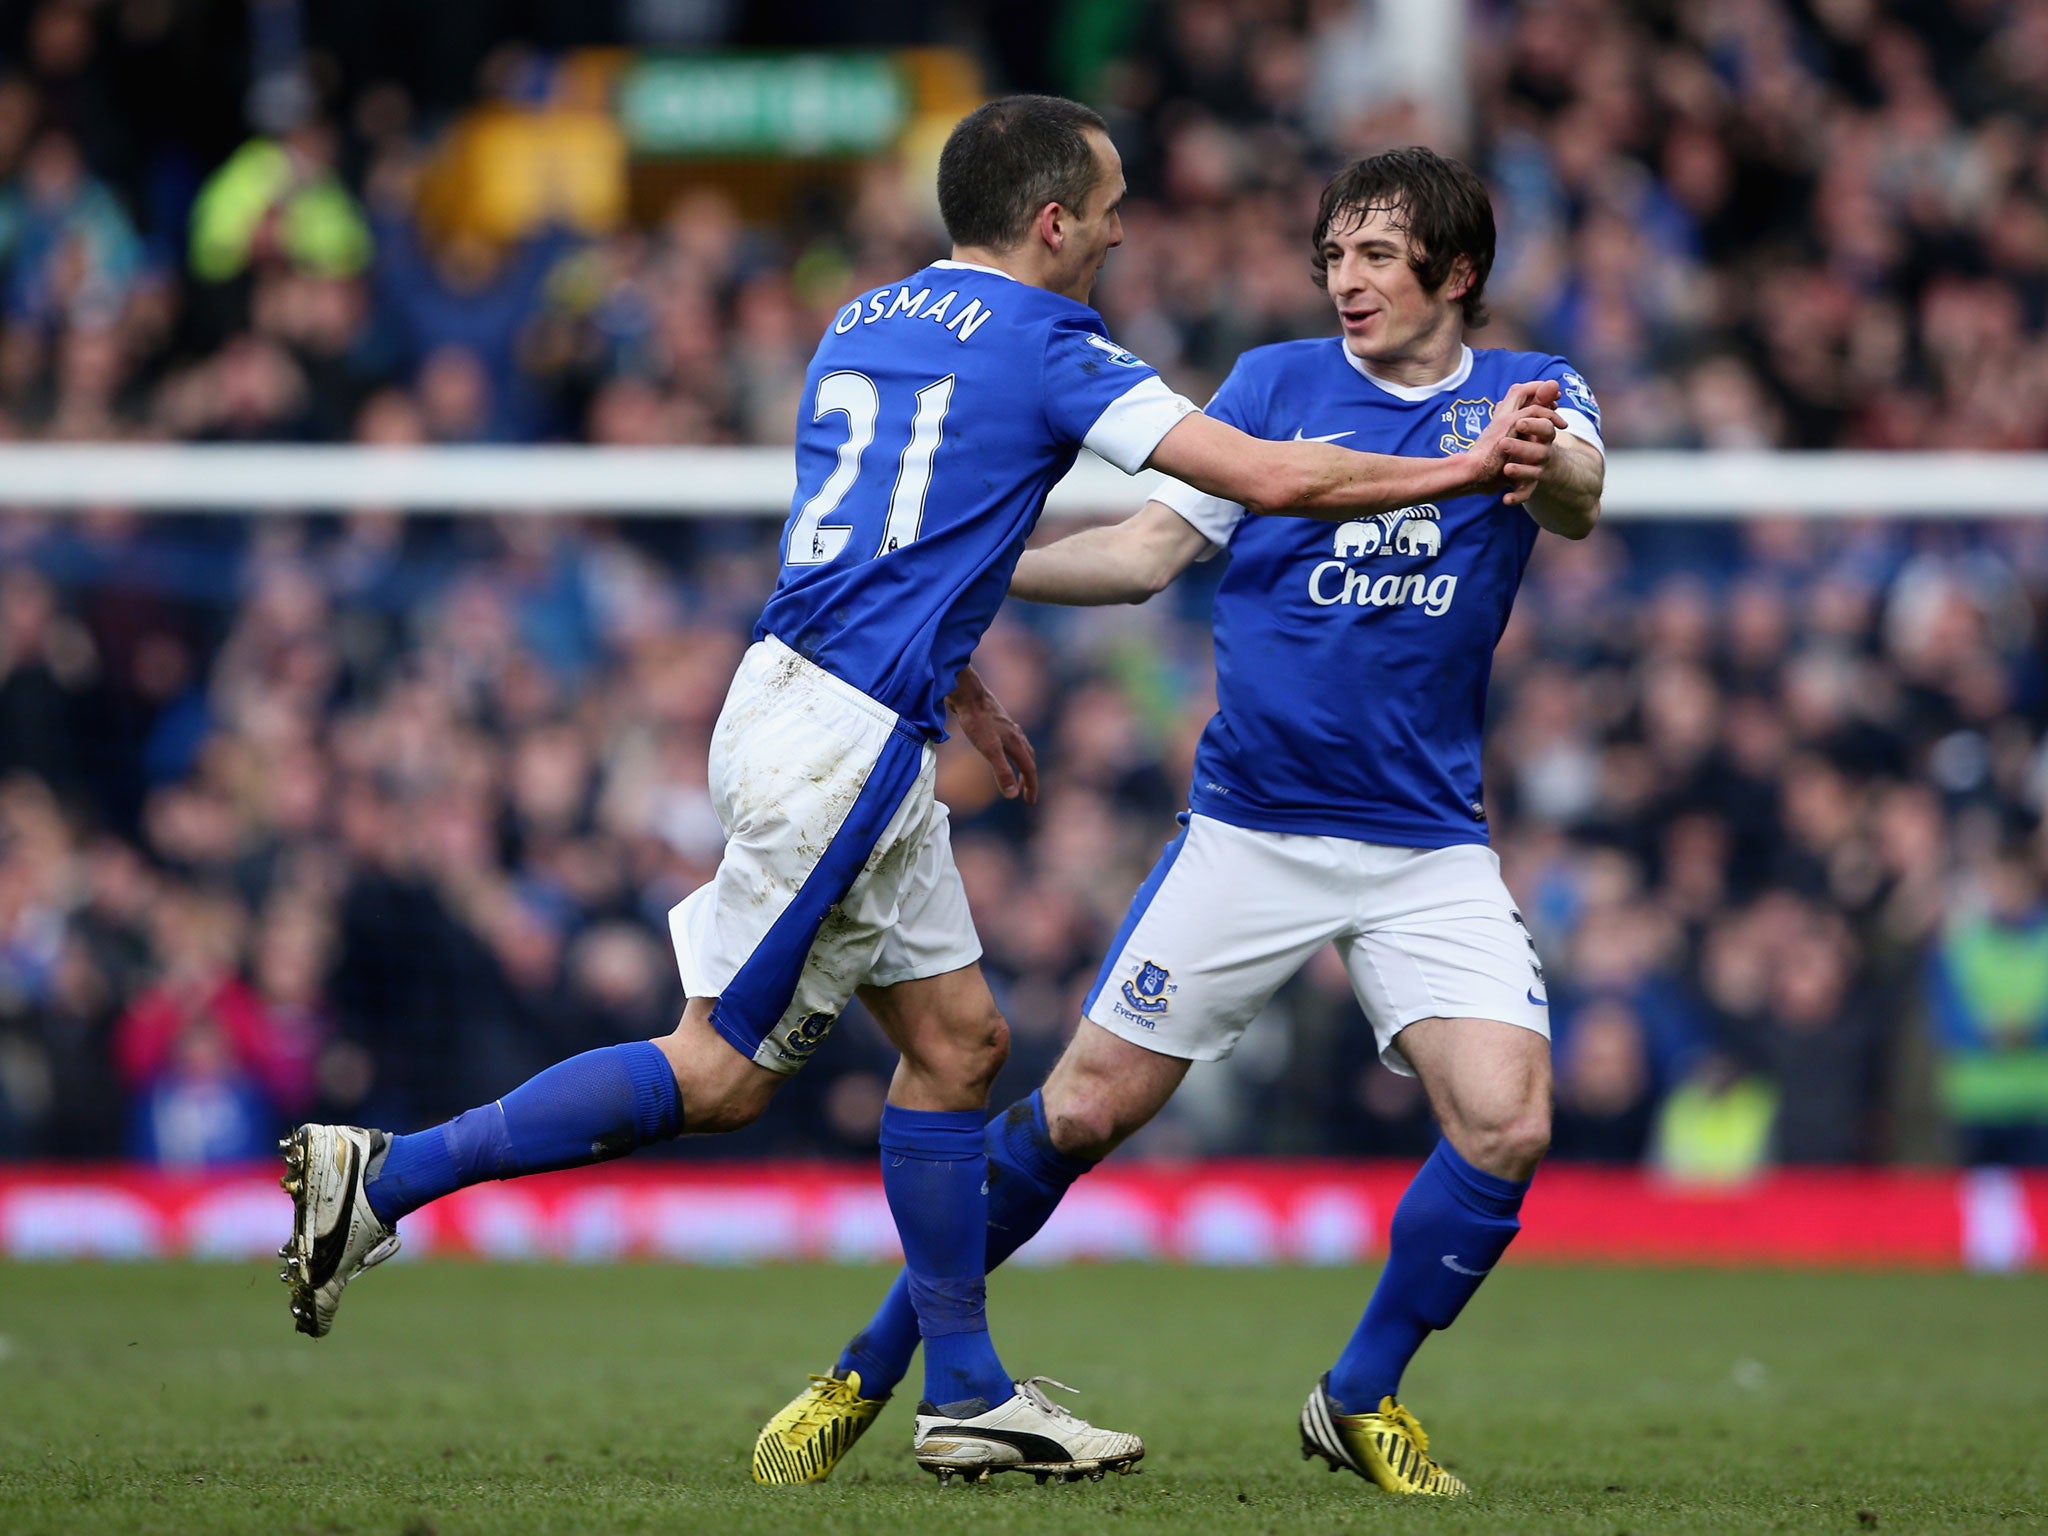 Leon Osman (l) of Everton celebrates scoring the opening goal with team-mate Leighton Baines